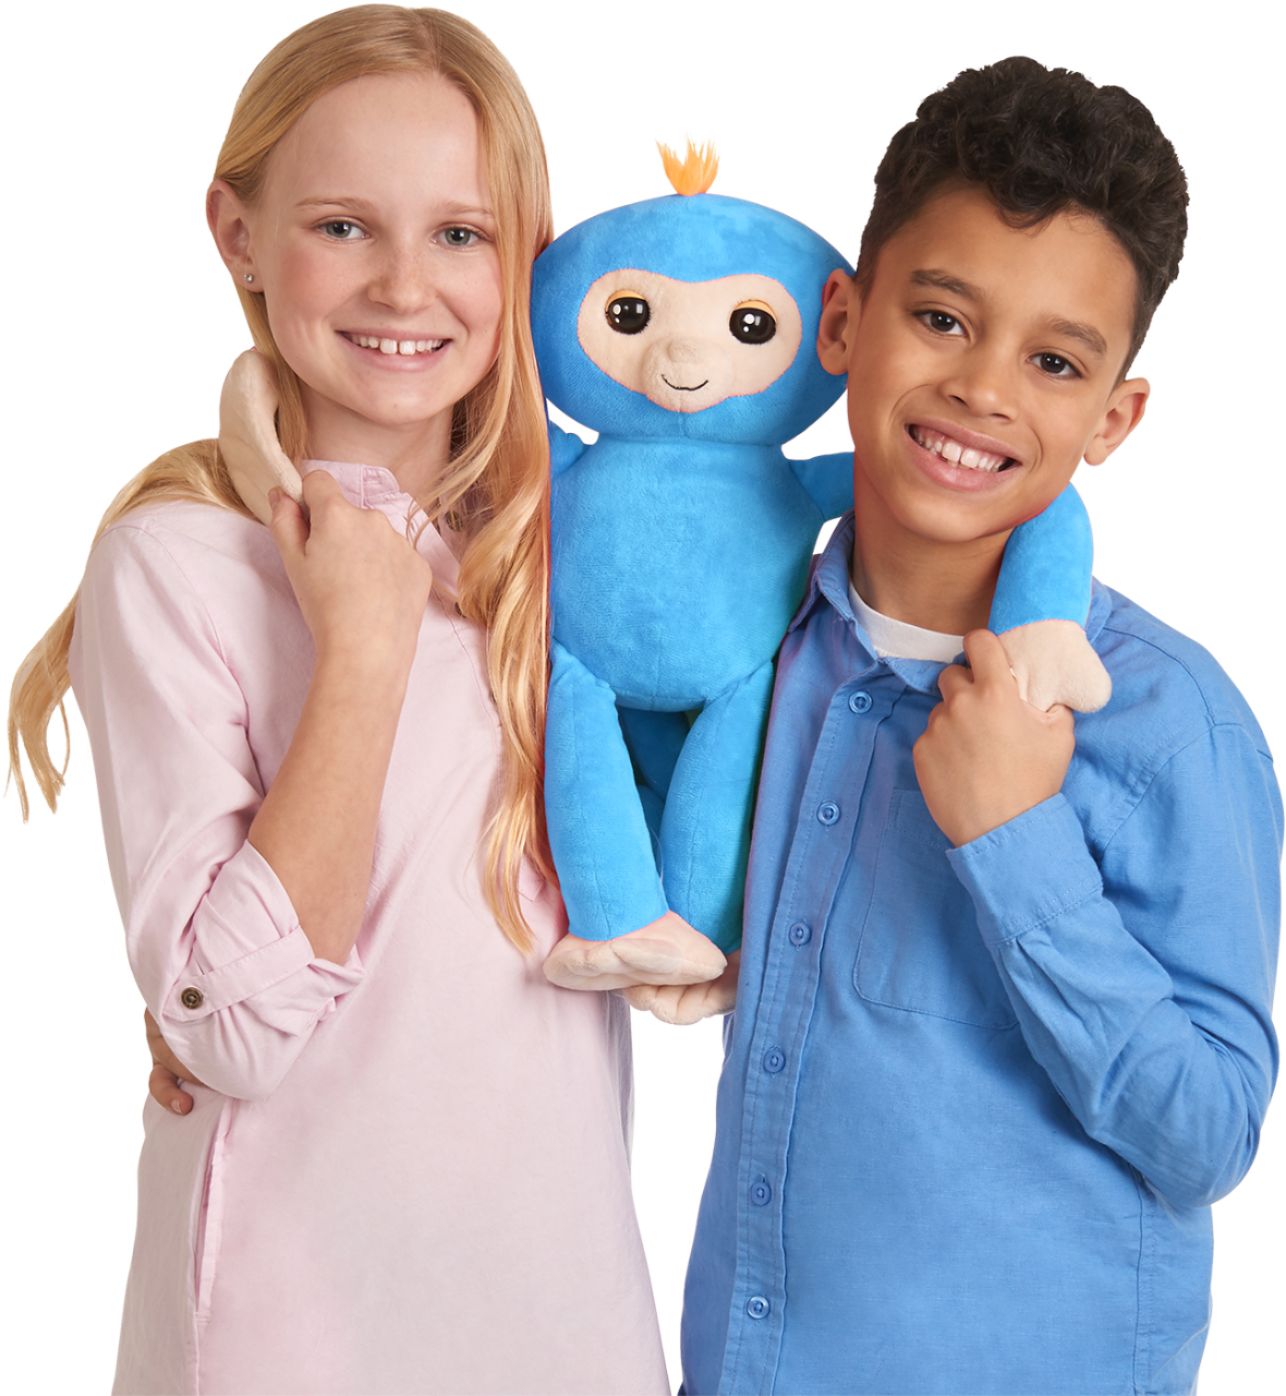 Details about   New Fingerlings Hugs Boris Blue Interactive Talking Plush Baby Monkey WowWee 